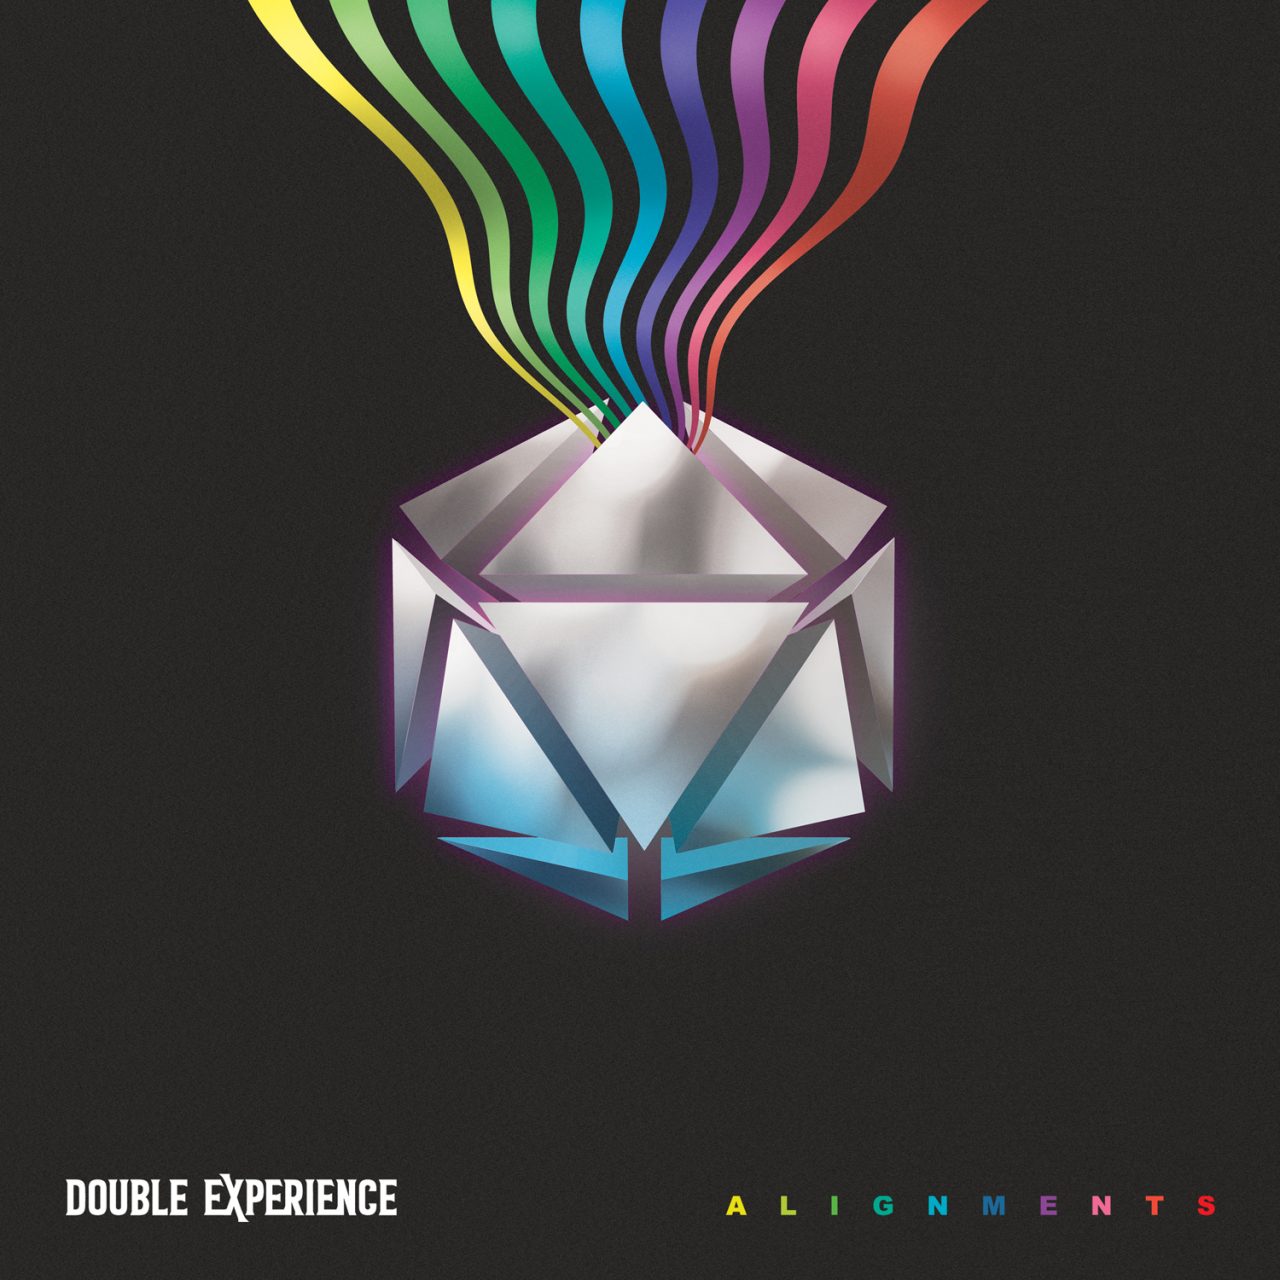 Das Album "Alignments" von Double Experience